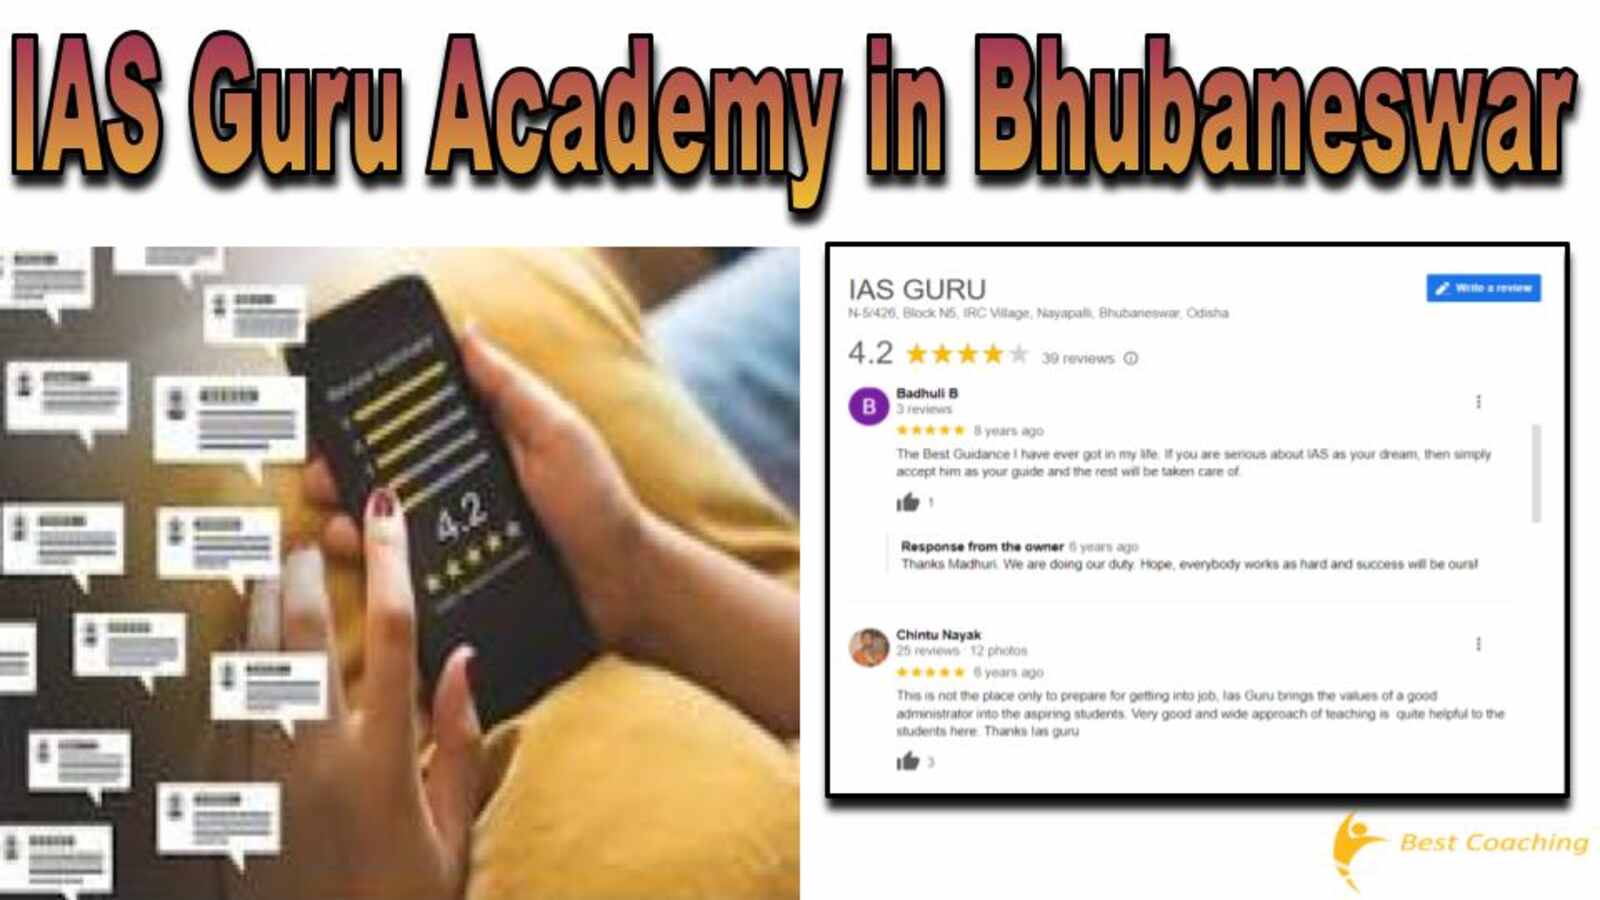 IAS Guru Academy in Bhubaneswar